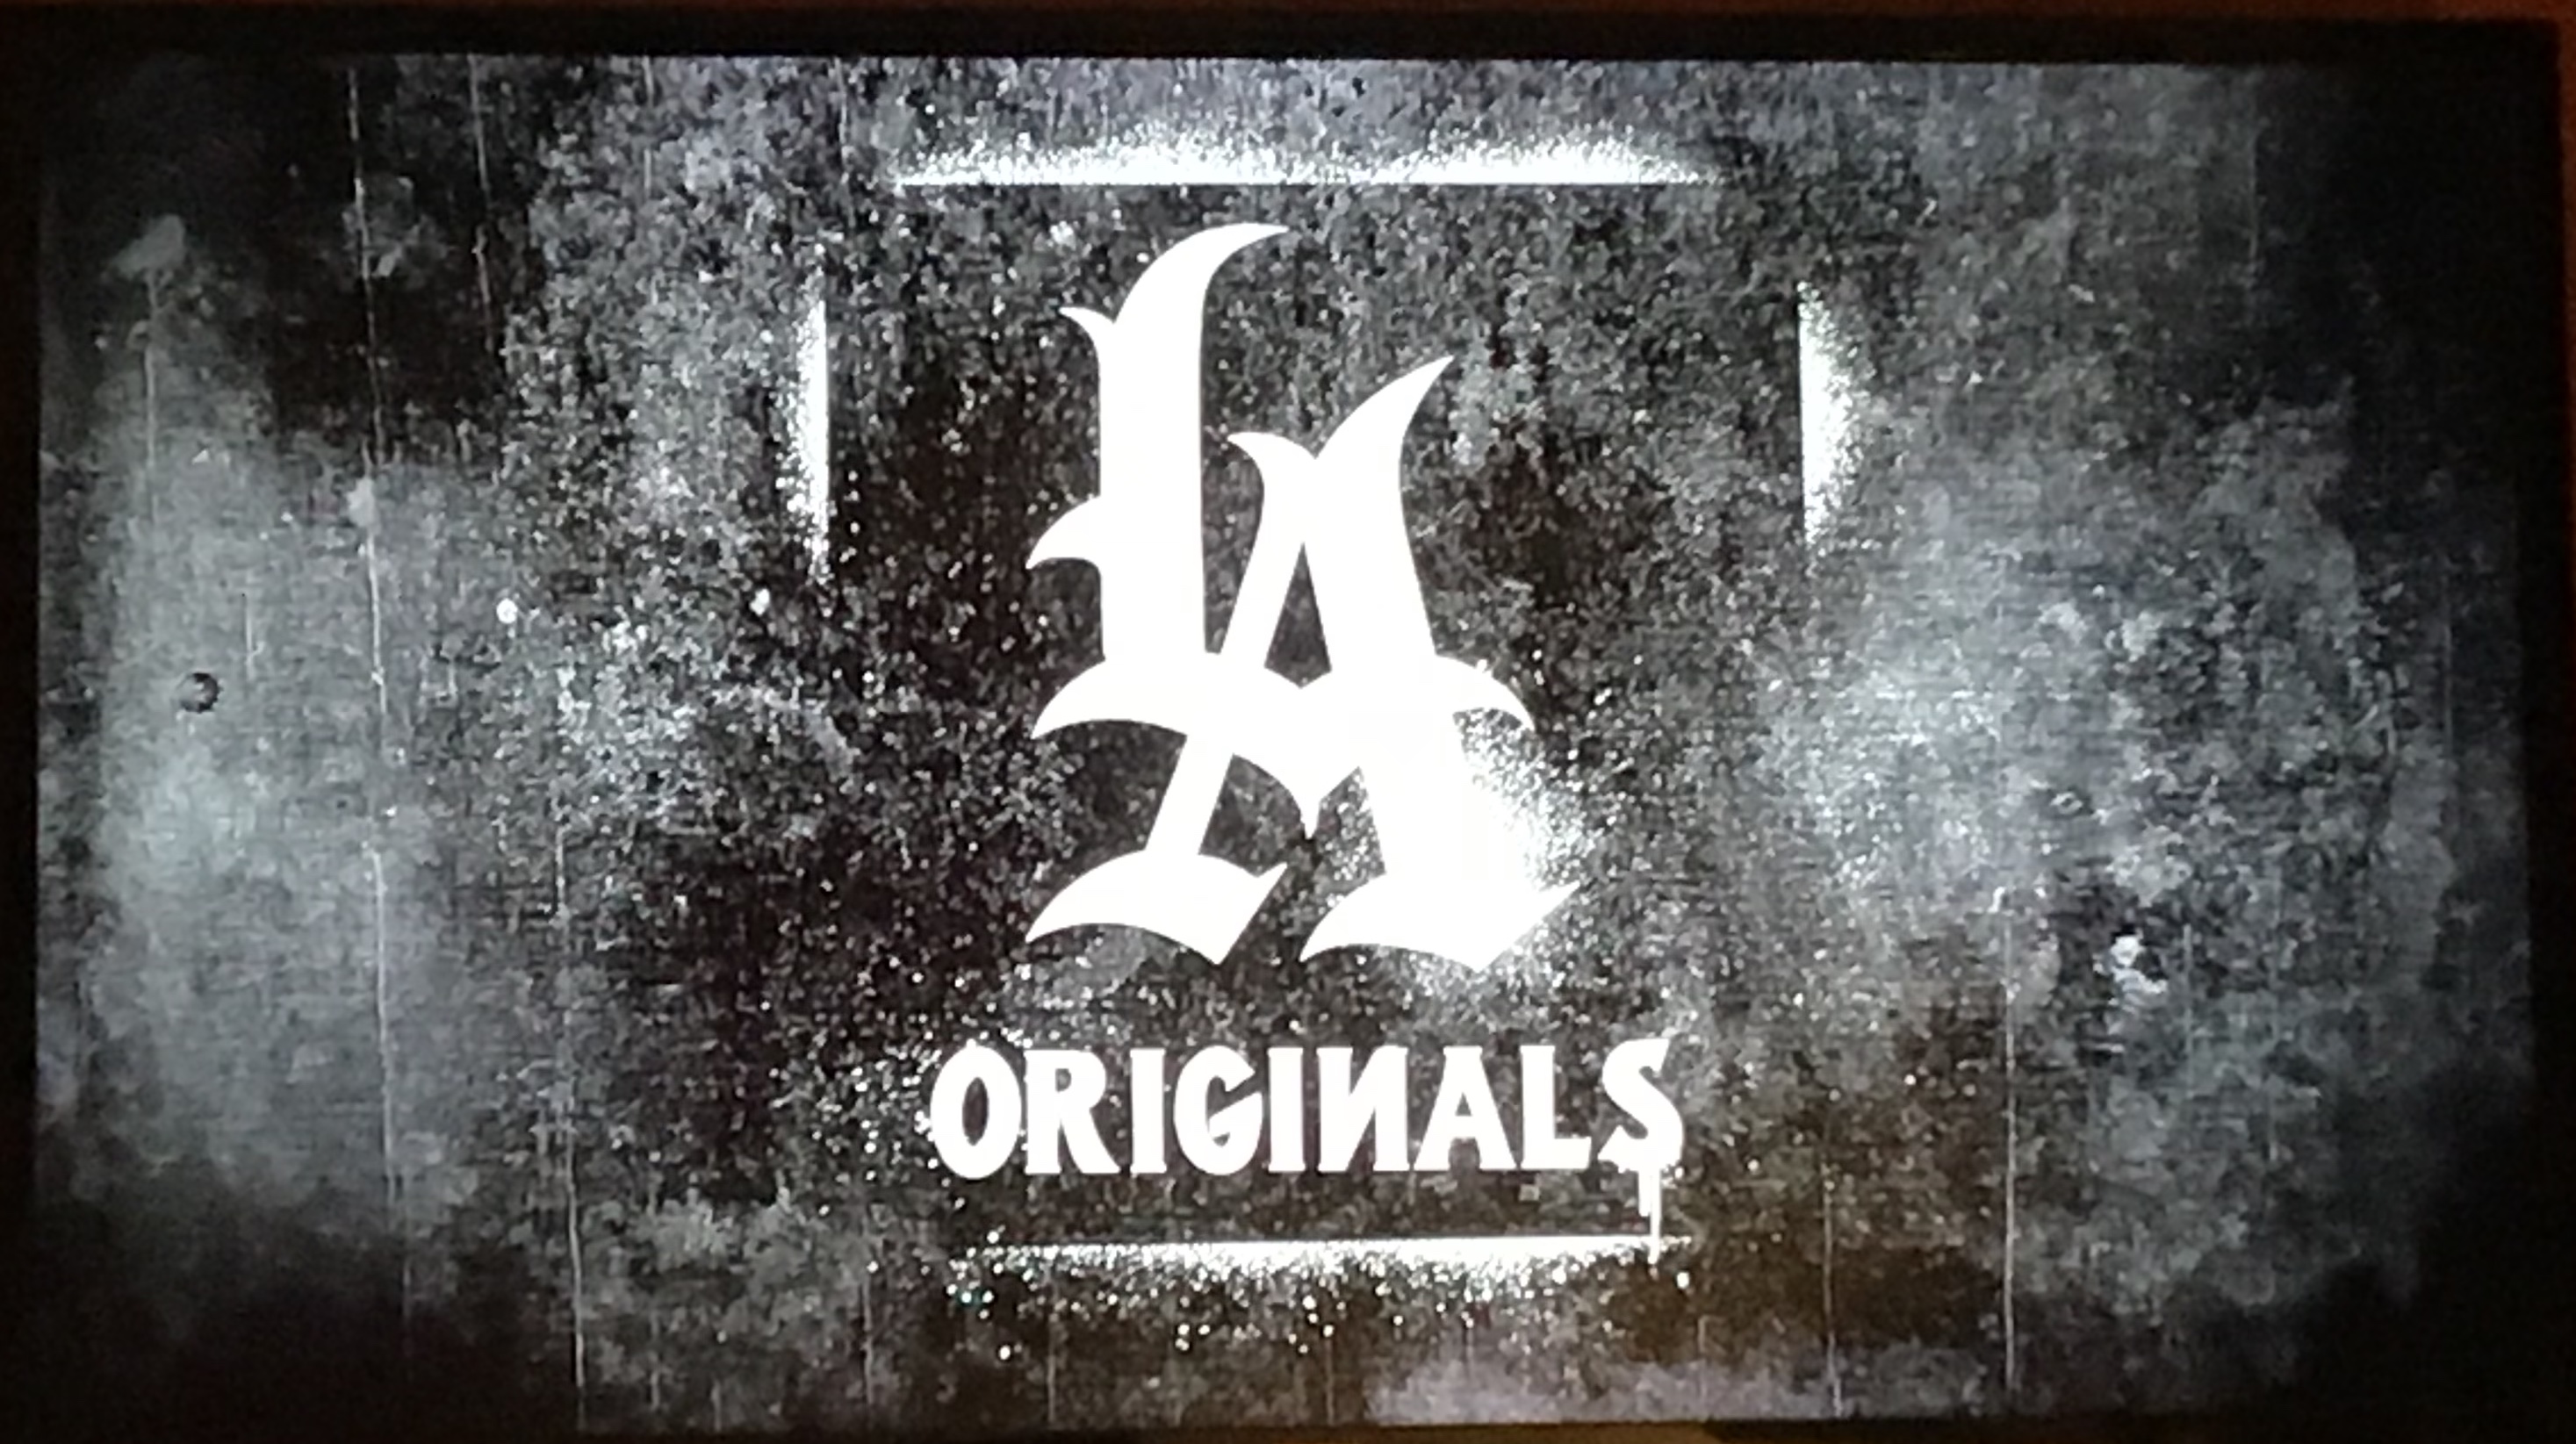 Watch Trailer For Netflix Documentary ‘LA Originals’ Featuring Eminem, Snoop Dogg & 50 Cent